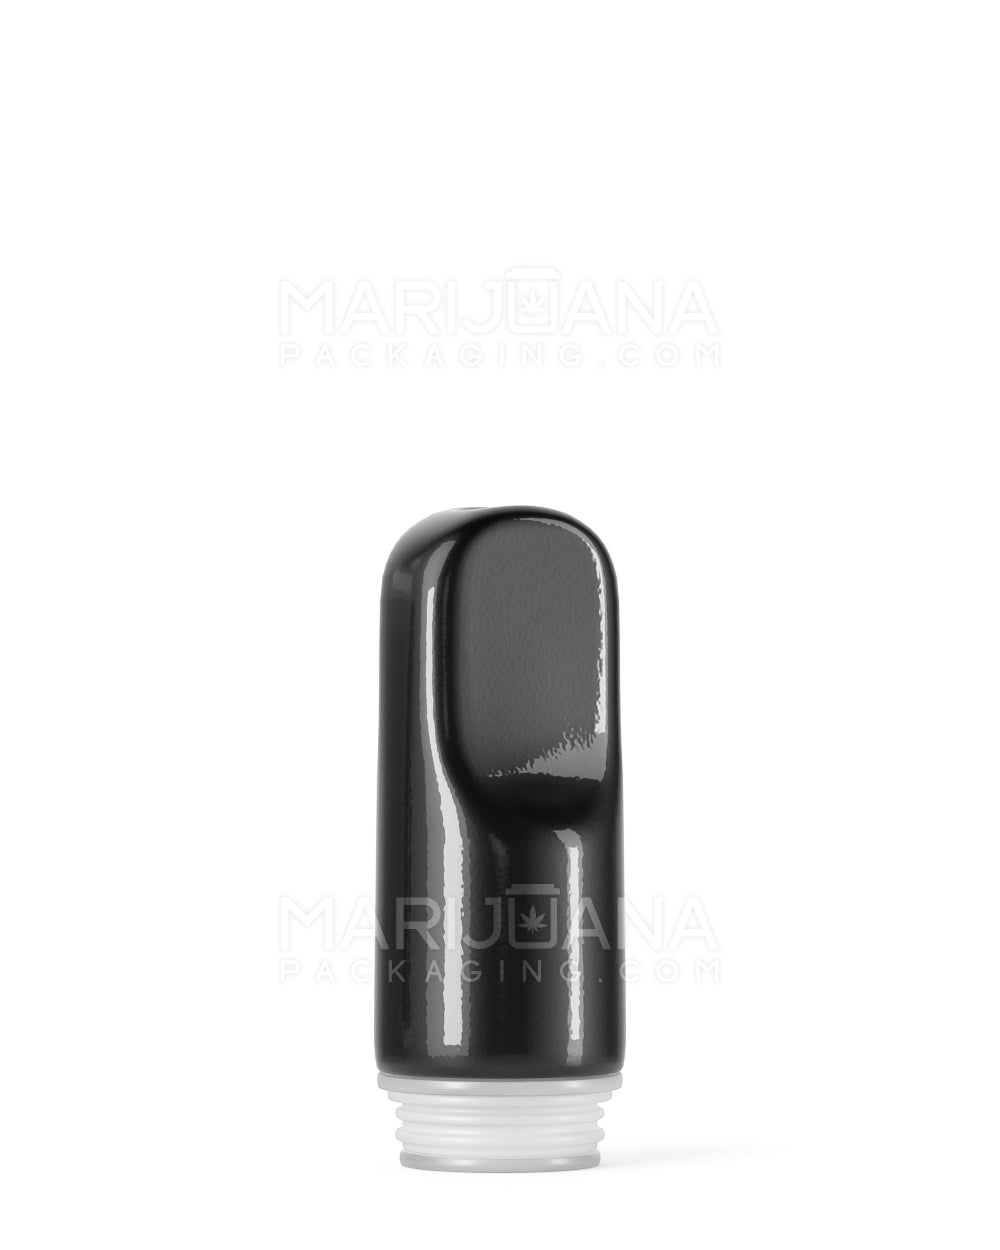 AVD | Flat Vape Mouthpiece for Glass Cartridges | Black Ceramic - Eazy Press - 600 Count - 2